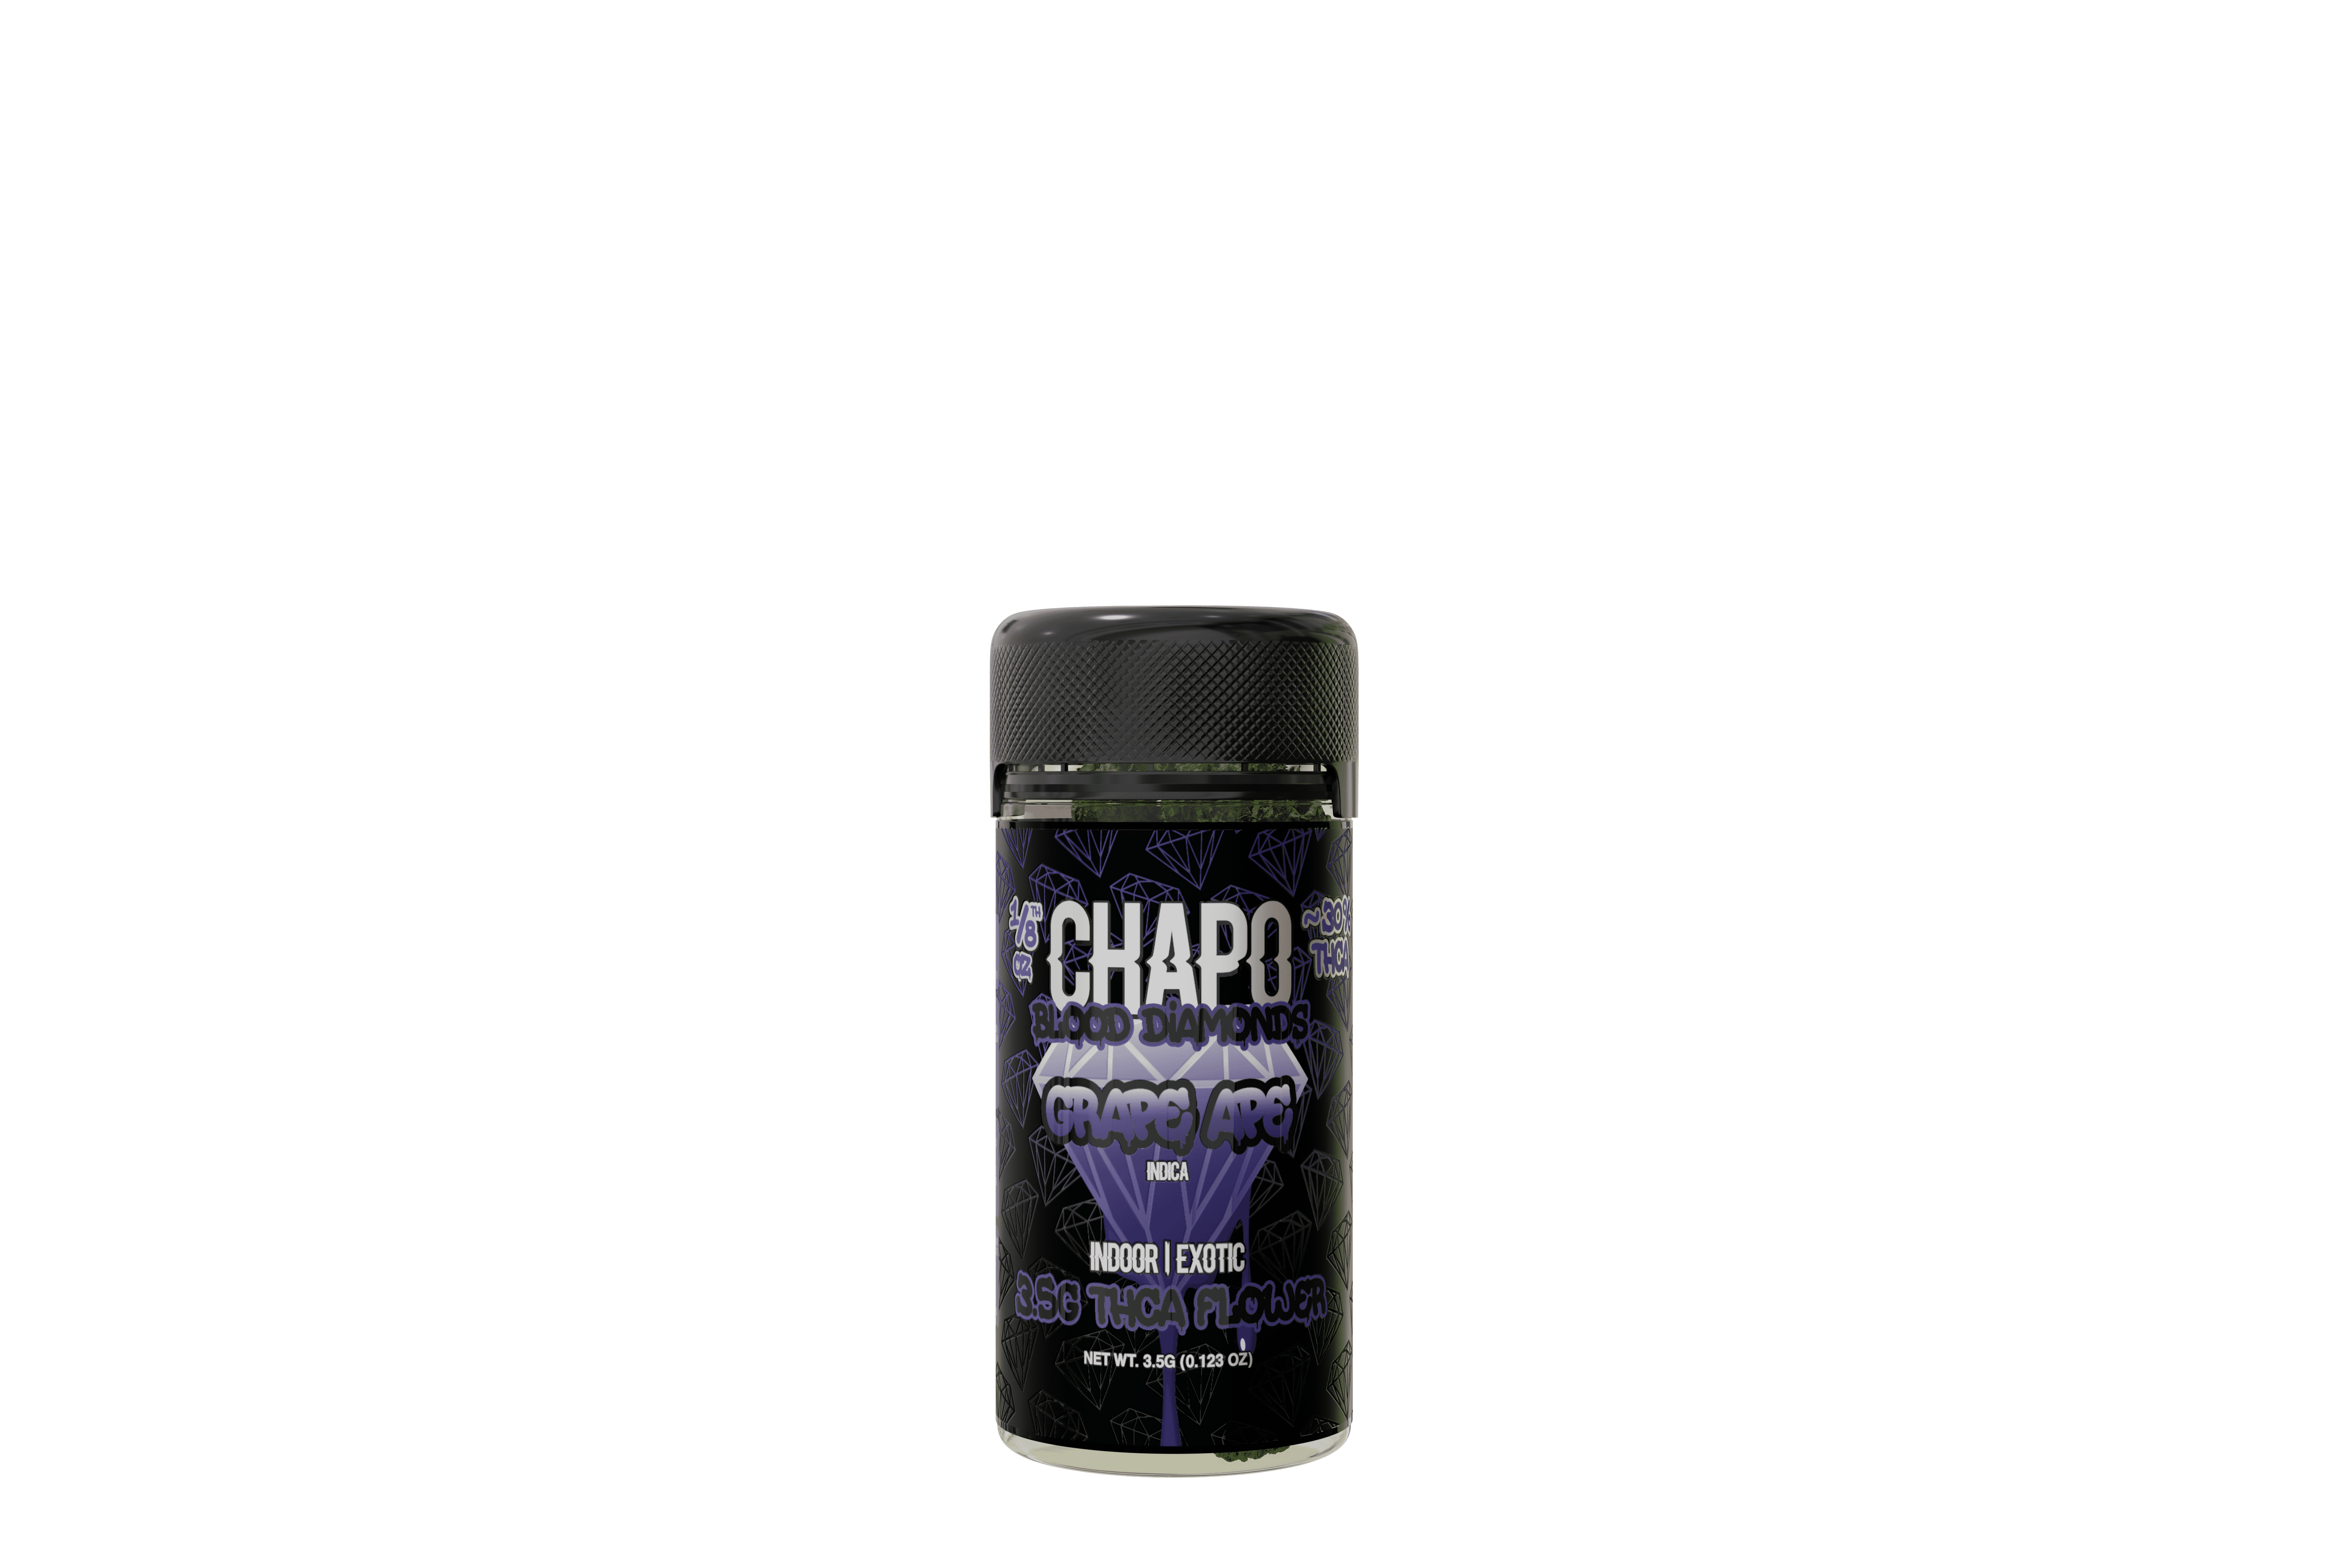 Chapo Blood Diamonds THC-A Indoor Exotic 3.5g Flower 6 pack - Vape Masterz